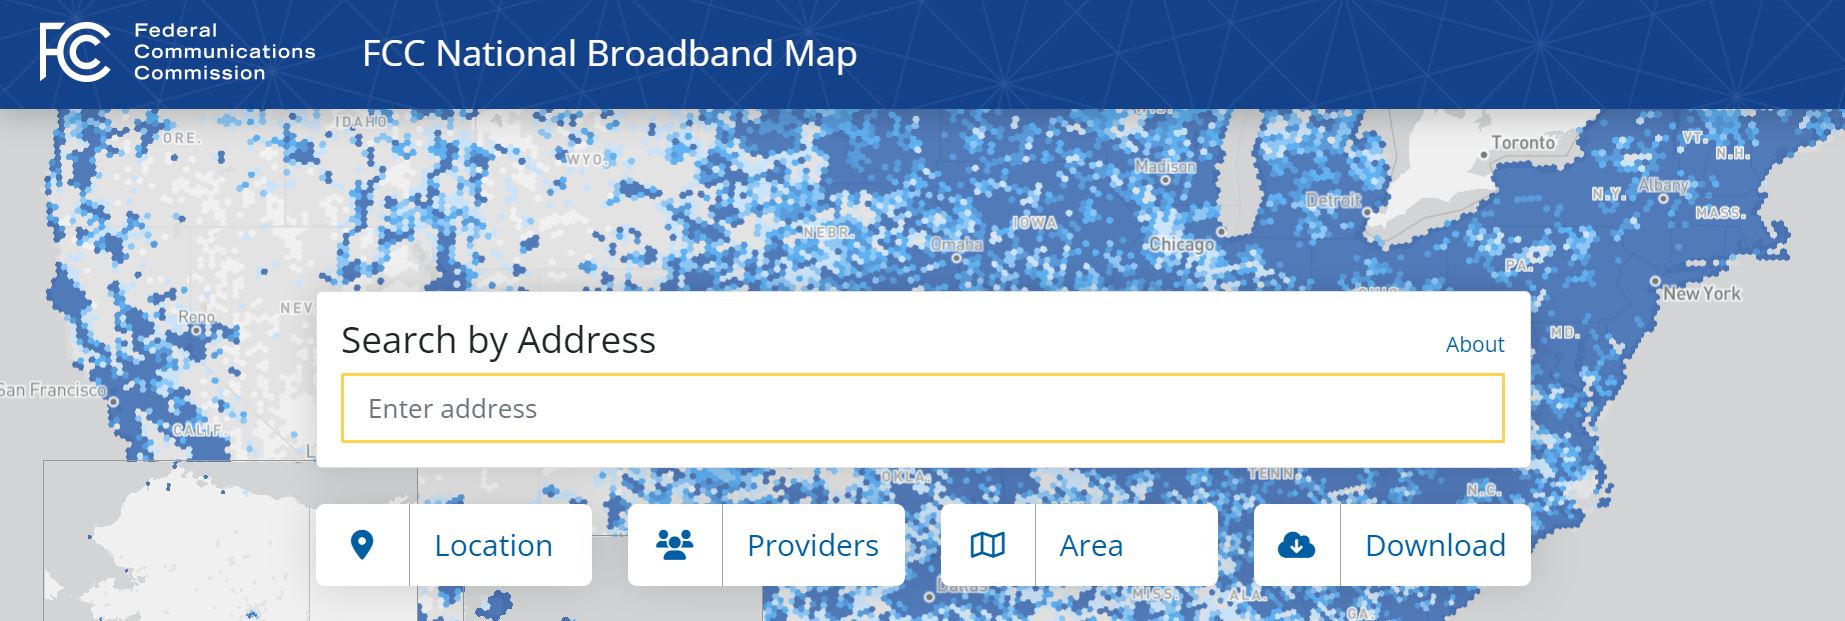 fcc national broadband map